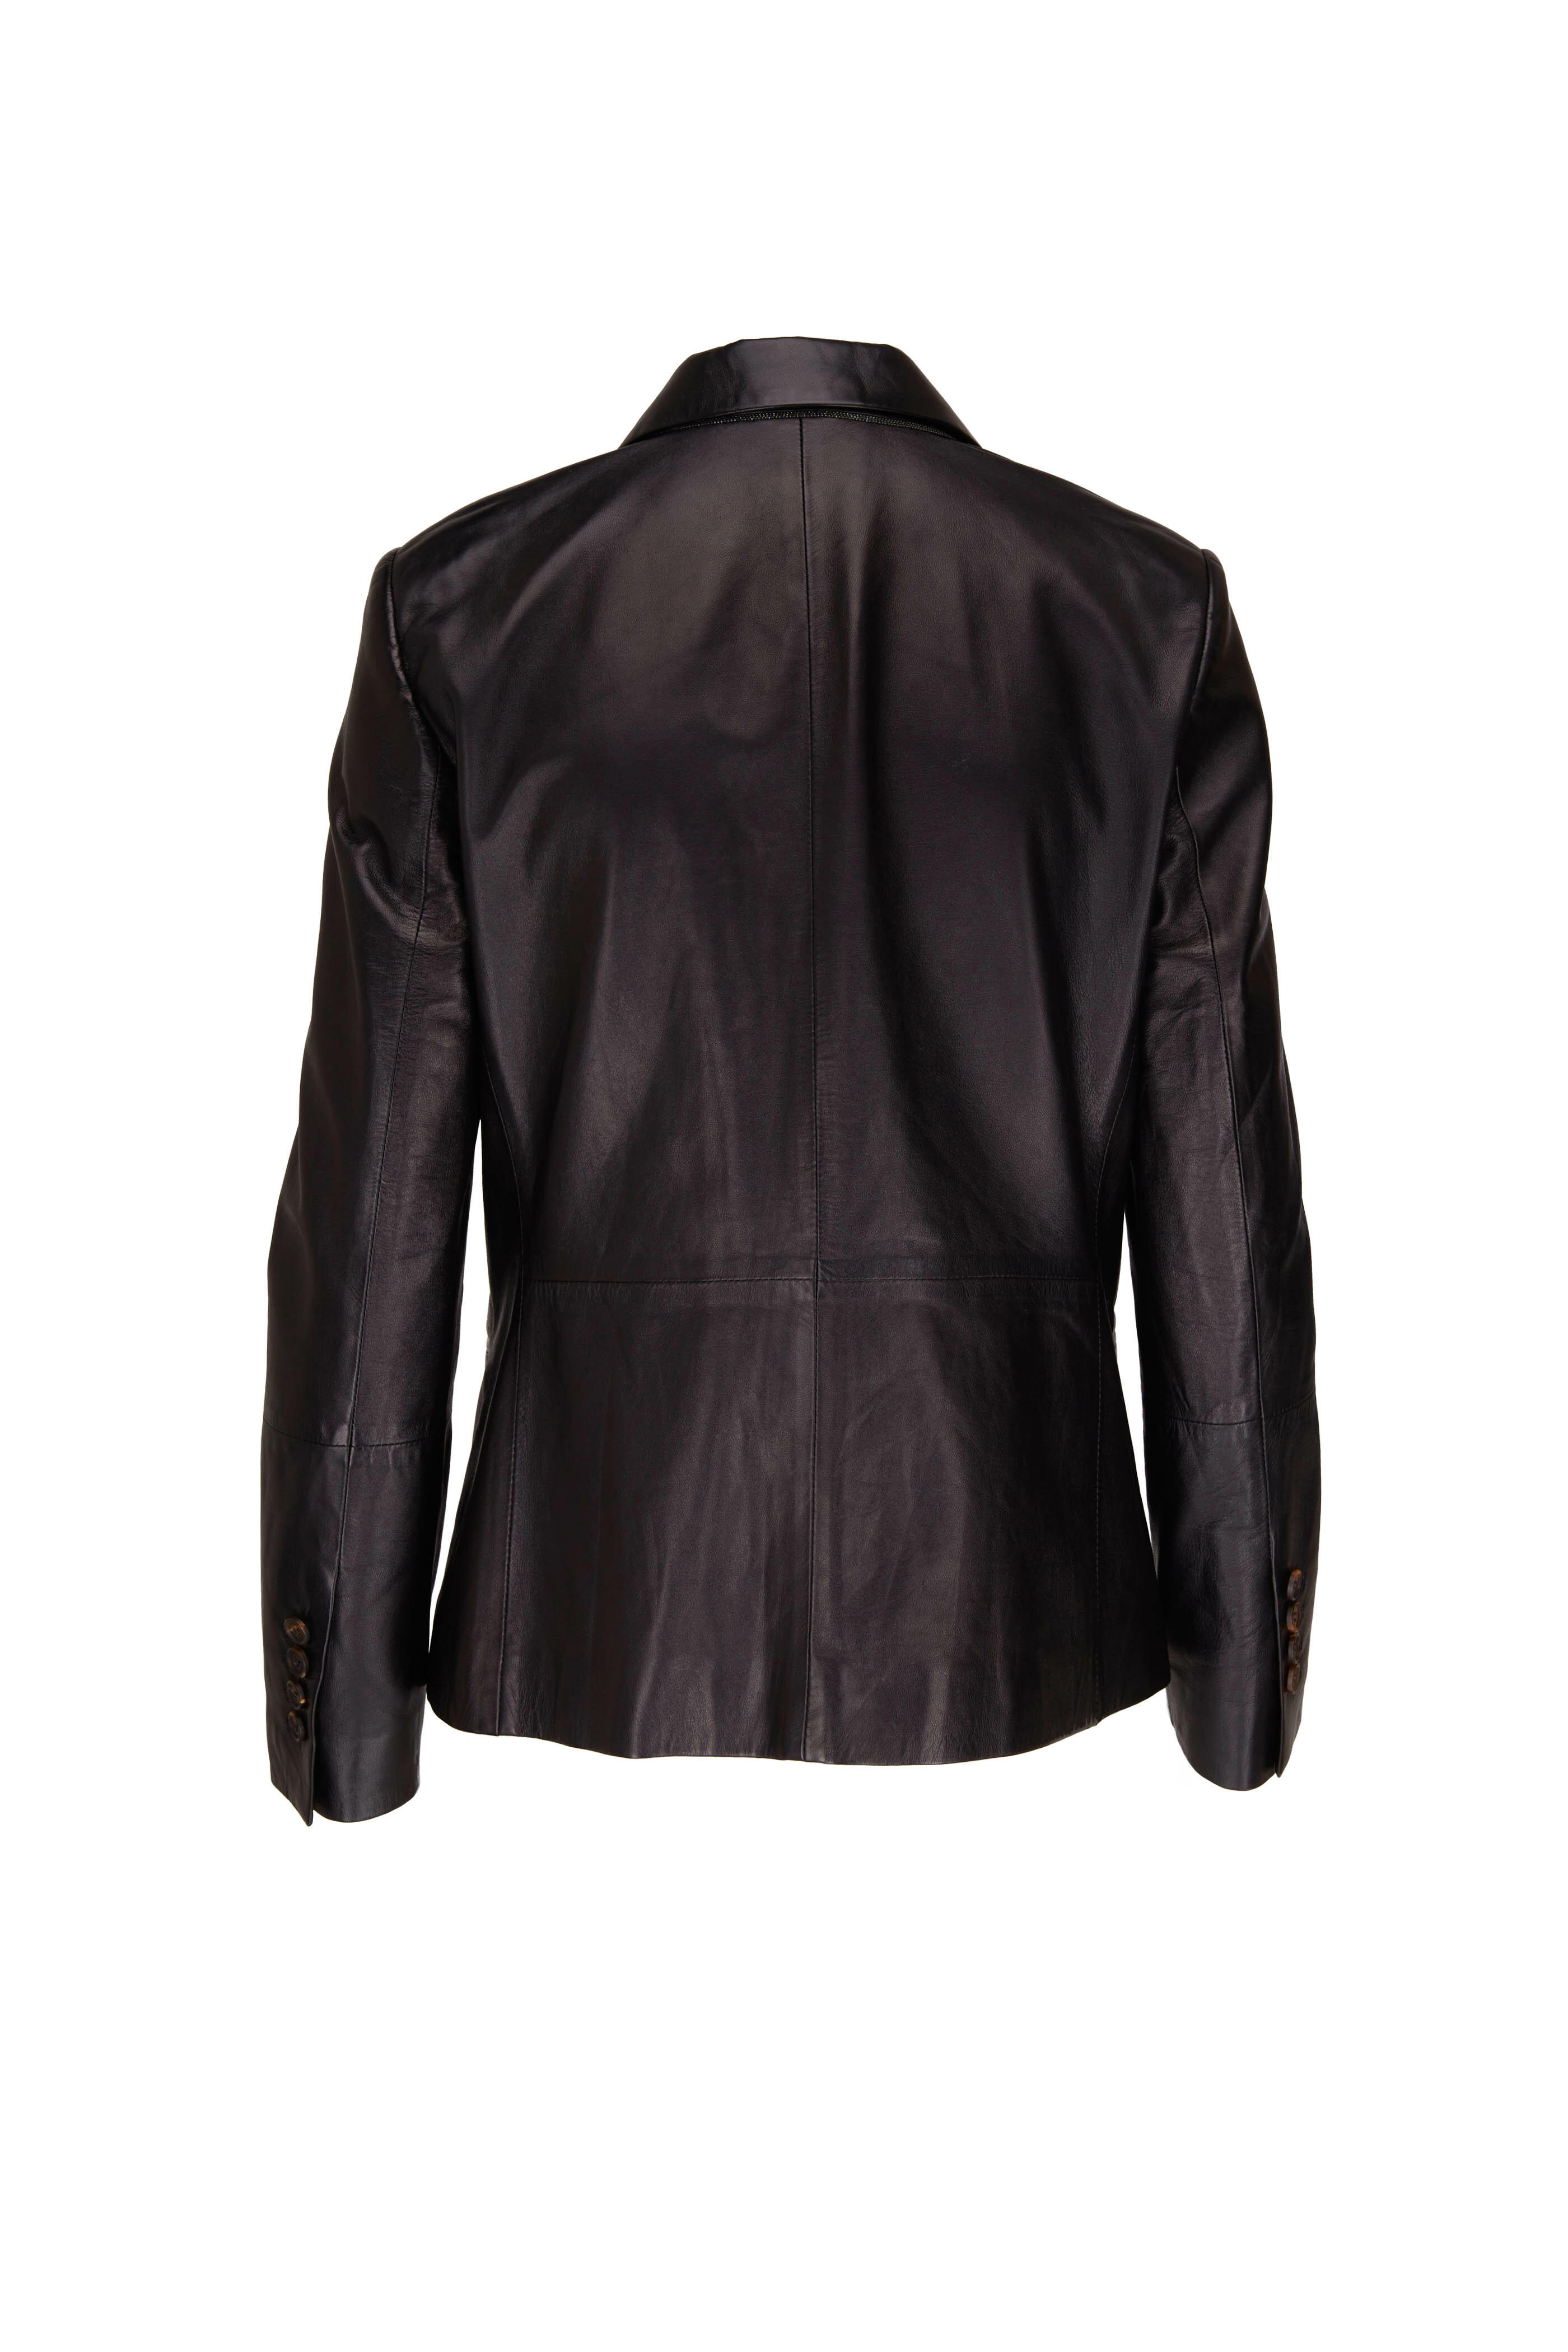 Brunello CUCINELLI Two-Tone Hooded Fur Jacket